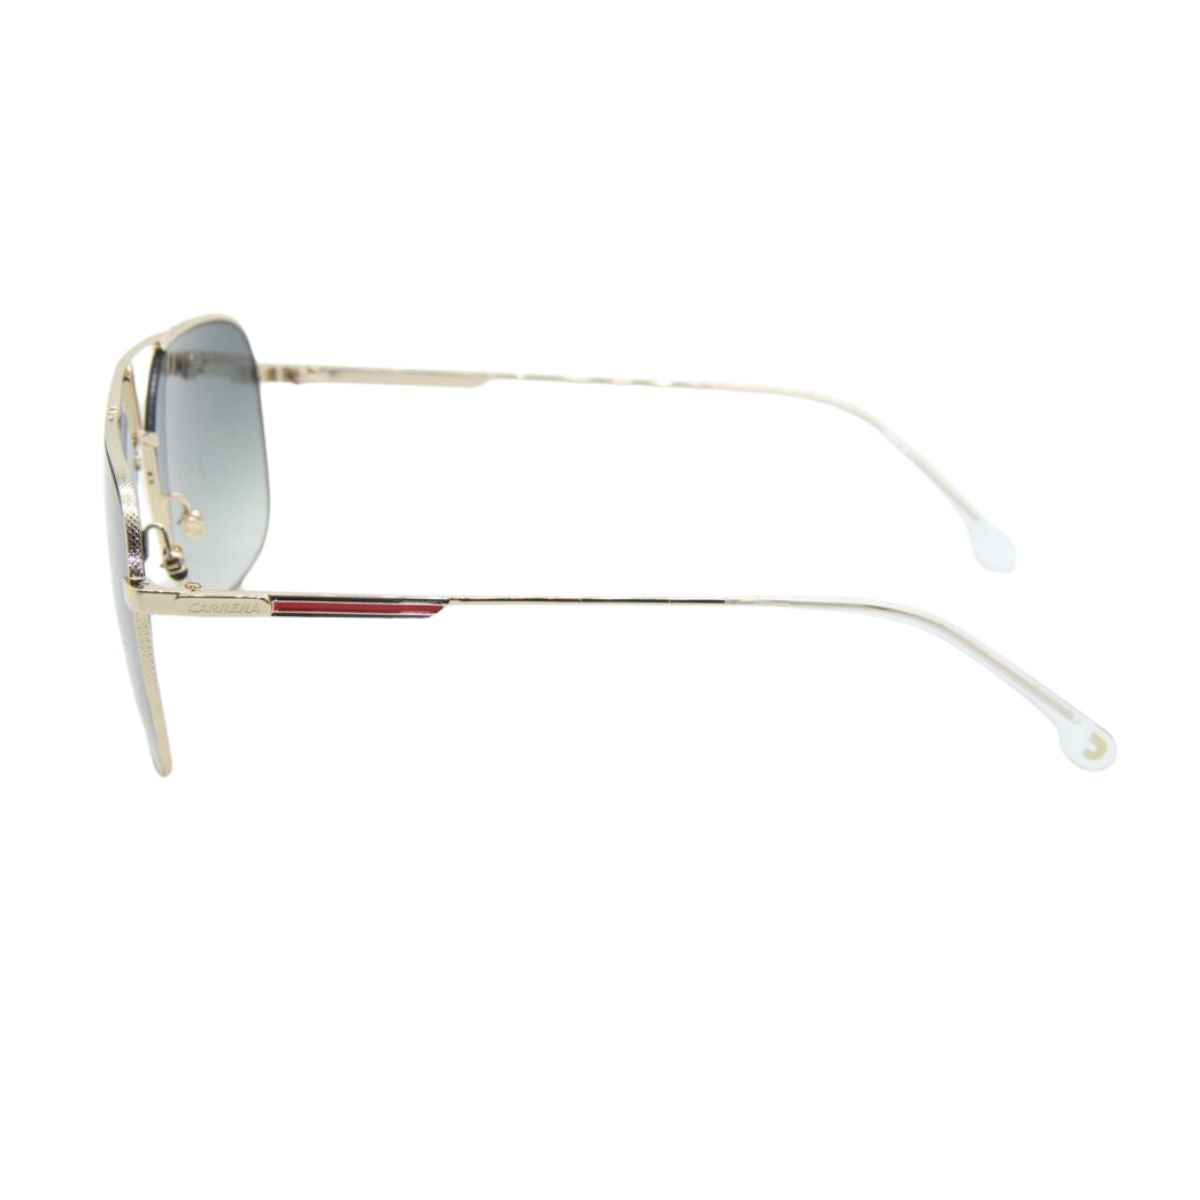 "Stylish Carrera Gold Aviator Sunglasses For Mens  For Mens at Optorium"